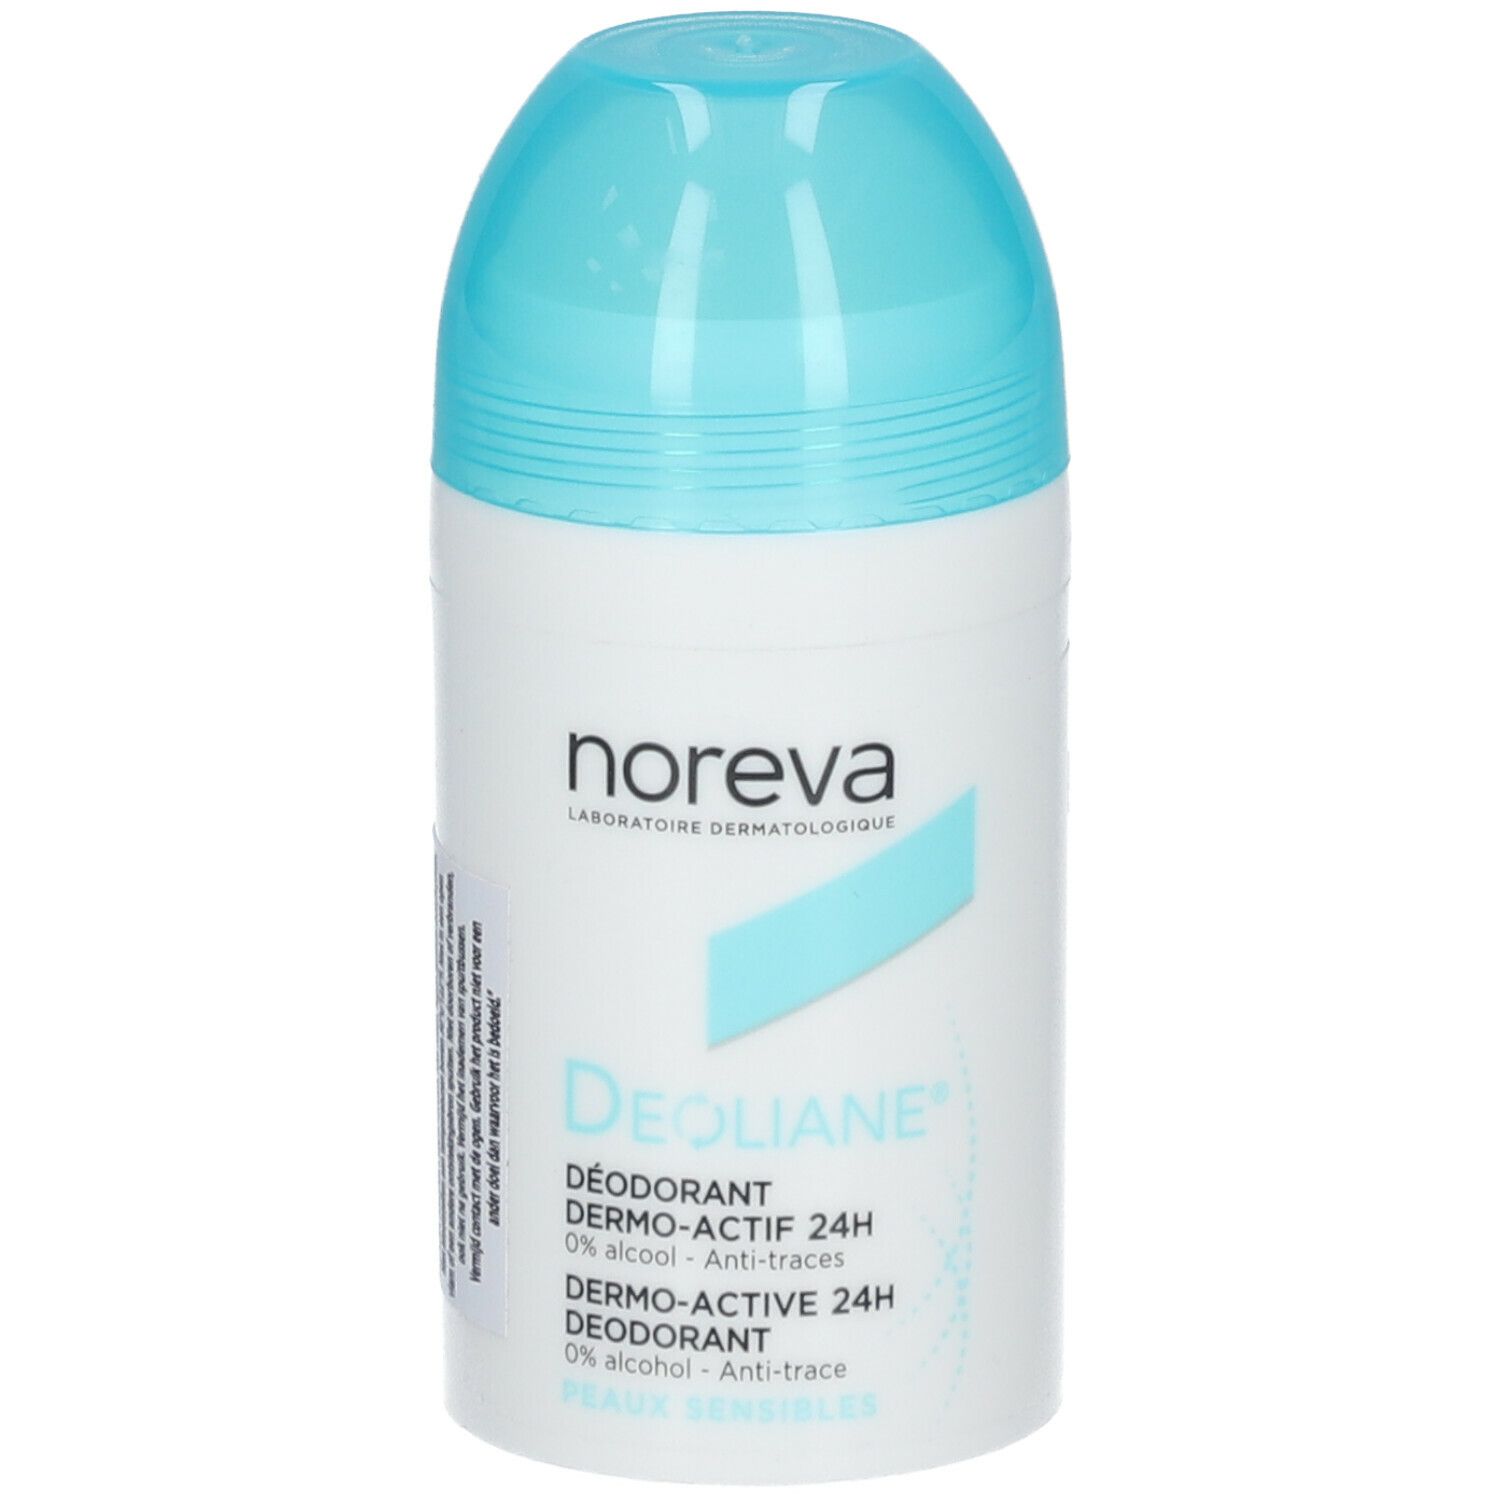 Noreva Deoliane® Dermo-Active 24h Deodorant Roll-On